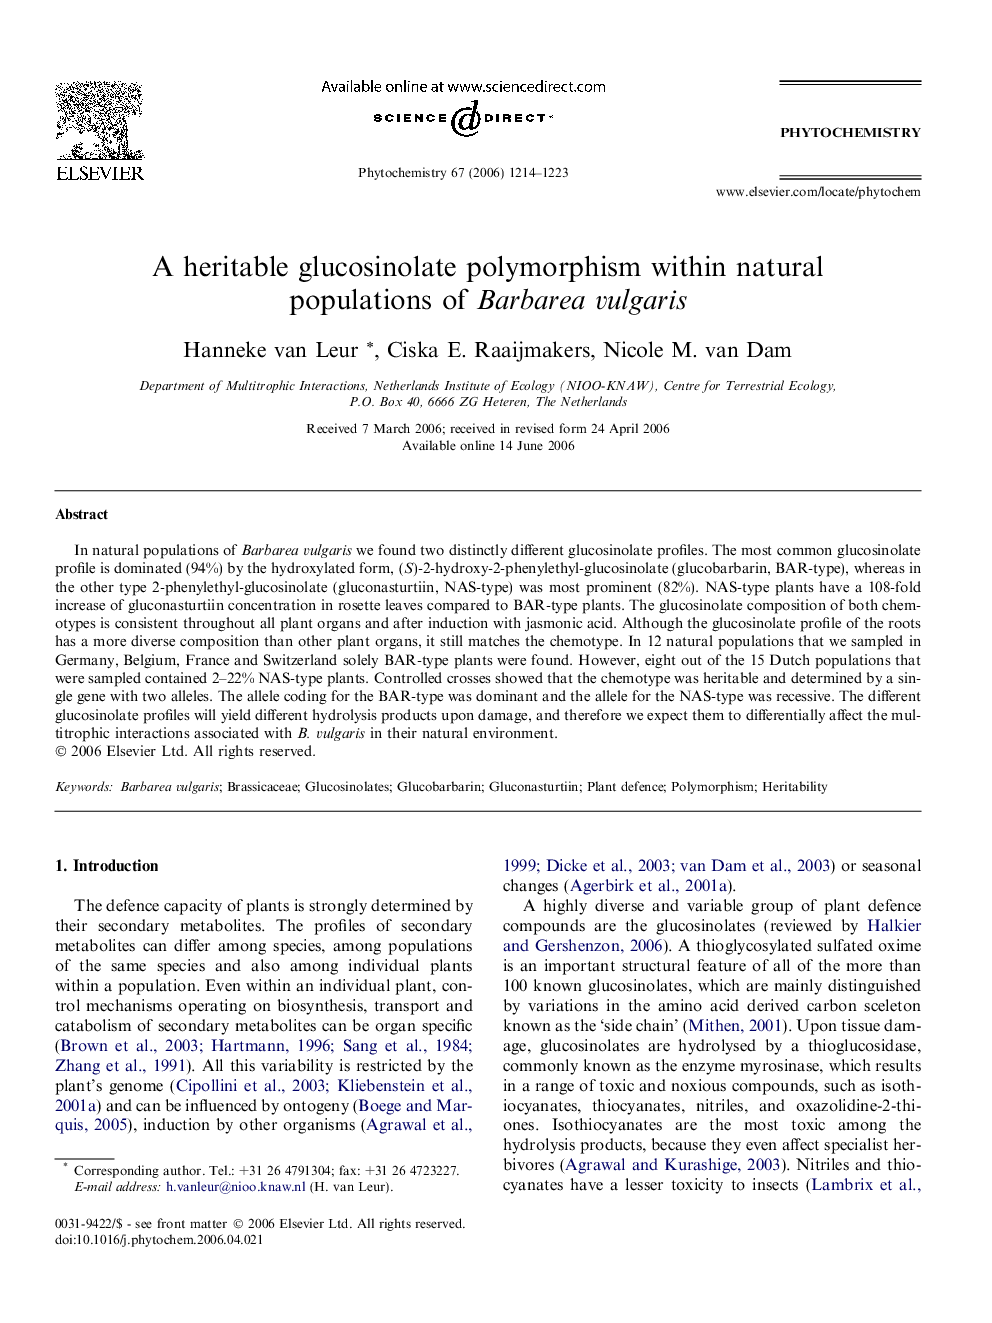 A heritable glucosinolate polymorphism within natural populations of Barbarea vulgaris